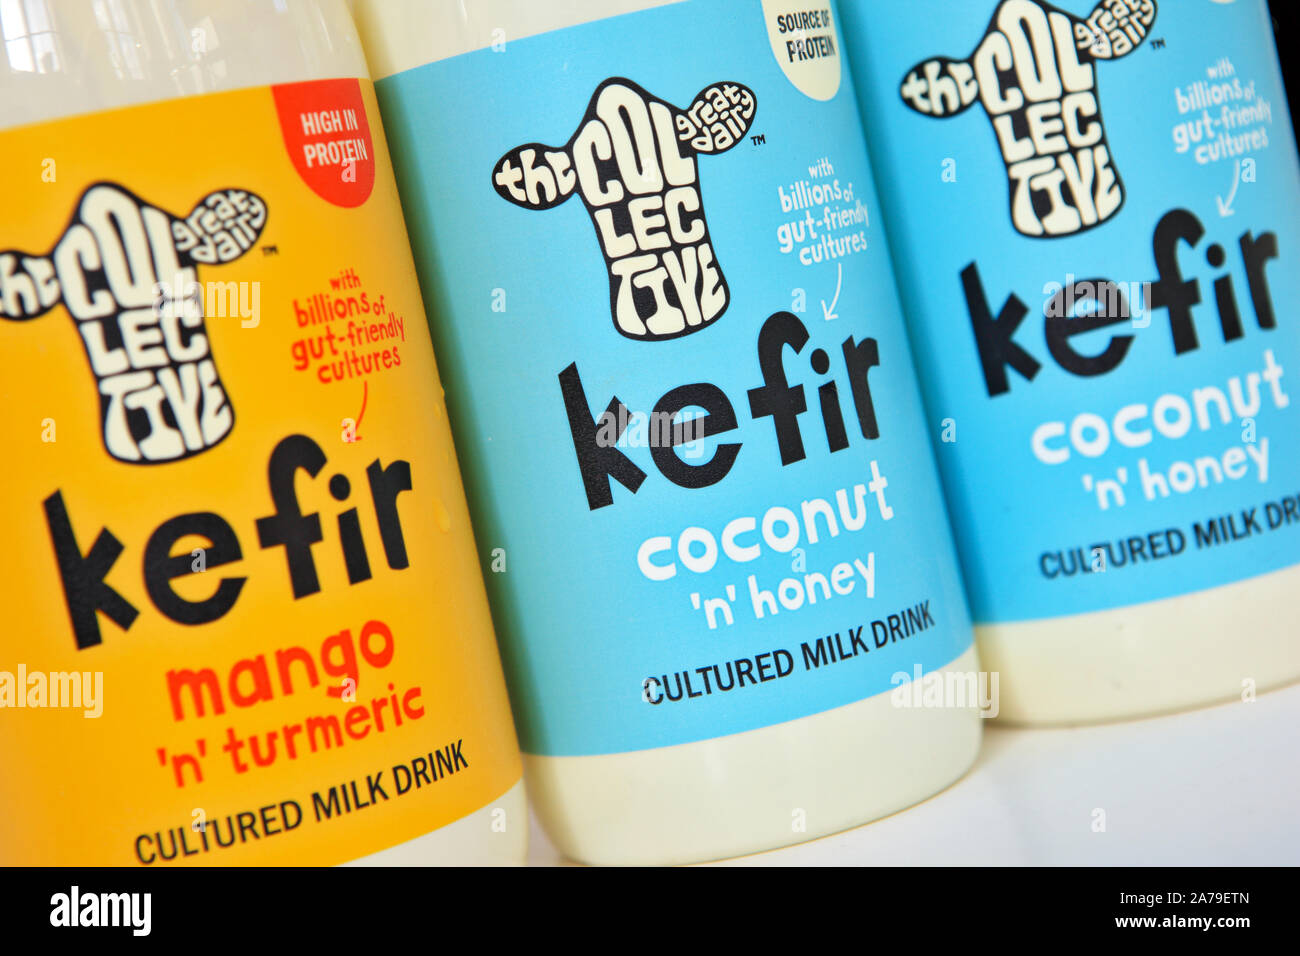 Kefir cultured milk drinks Stock Photo